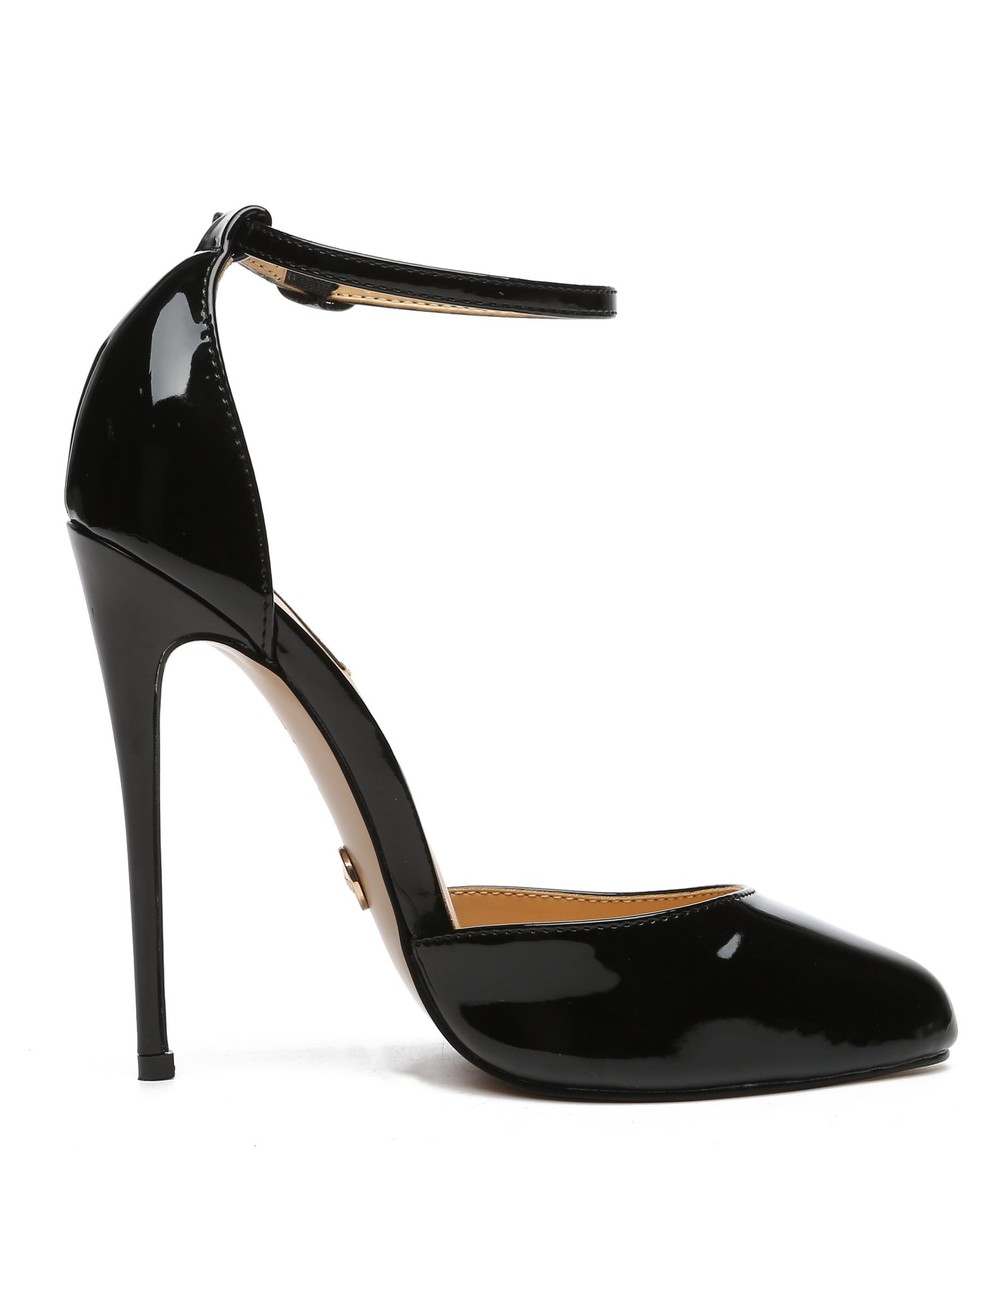 Giaro BELLA BLACK SHINY OPEN PUMPS - Shoebidoo Shoes | Giaro high heels